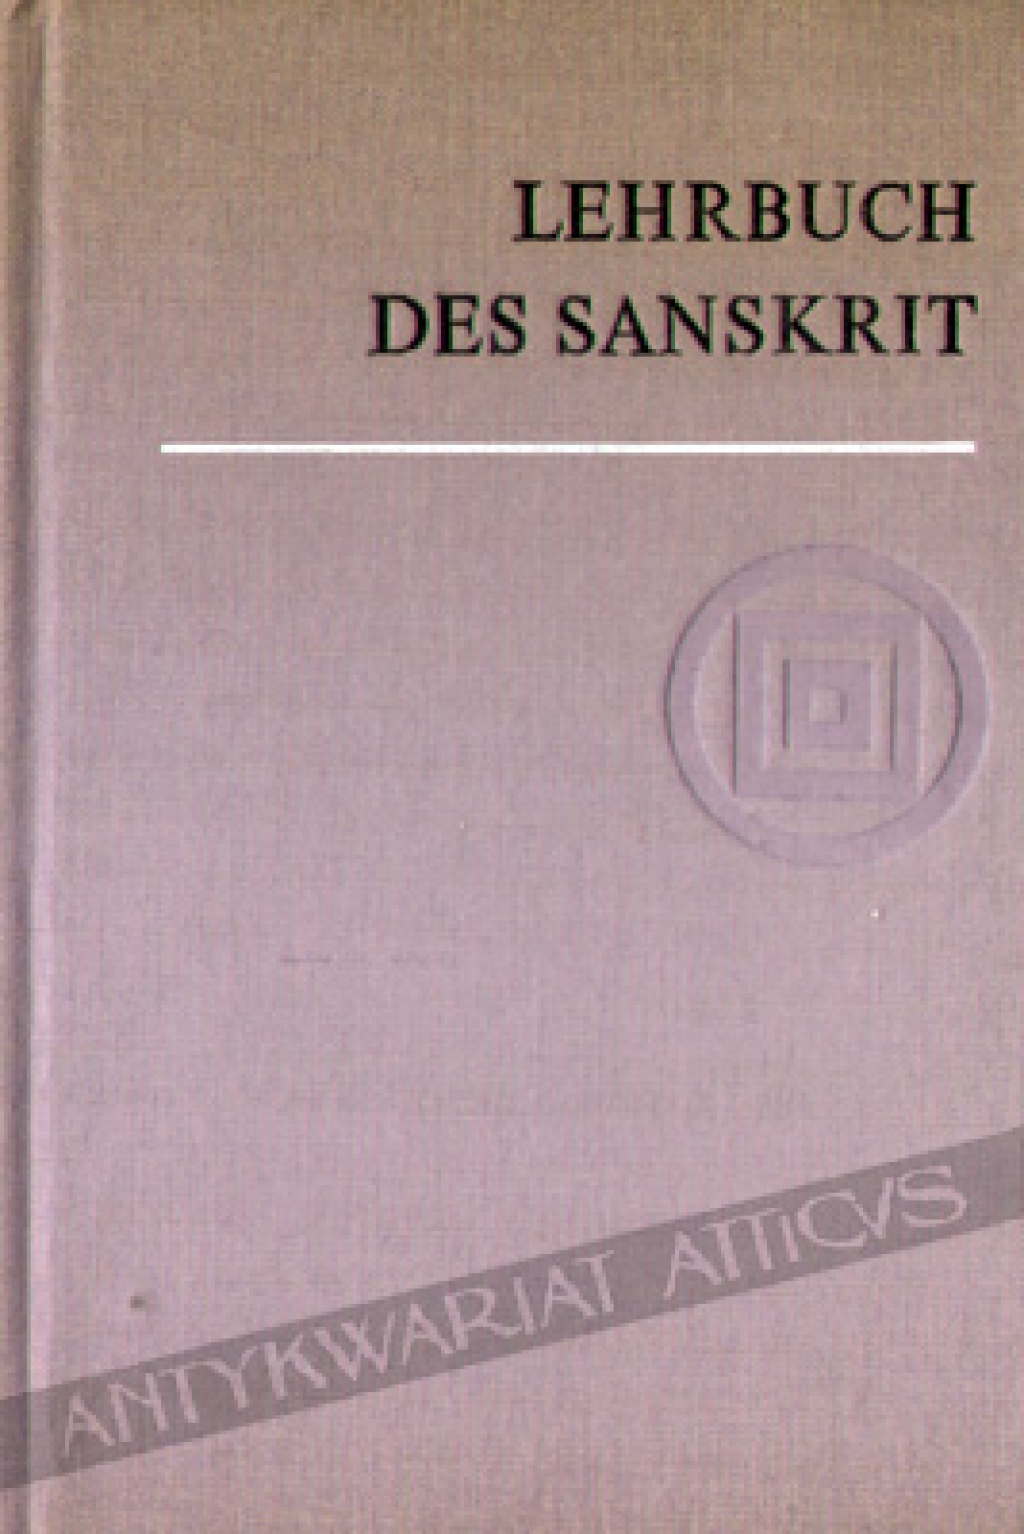 Lehrbuch des Sanskrit. Grammatik - Lektionen - Glossar